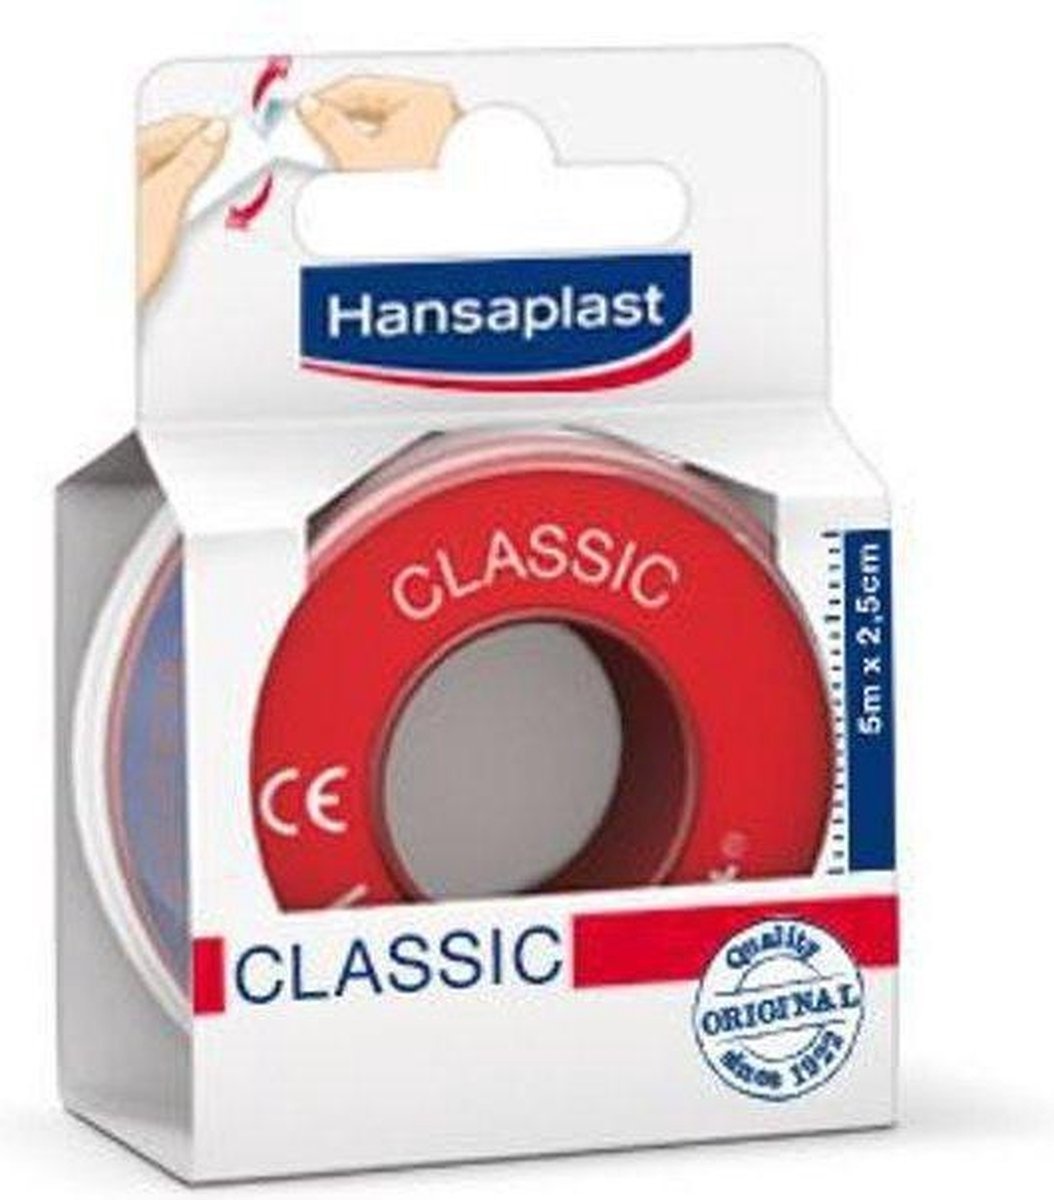 Hansaplast Classic Heftpflaster - 1,25 cm x 5 m